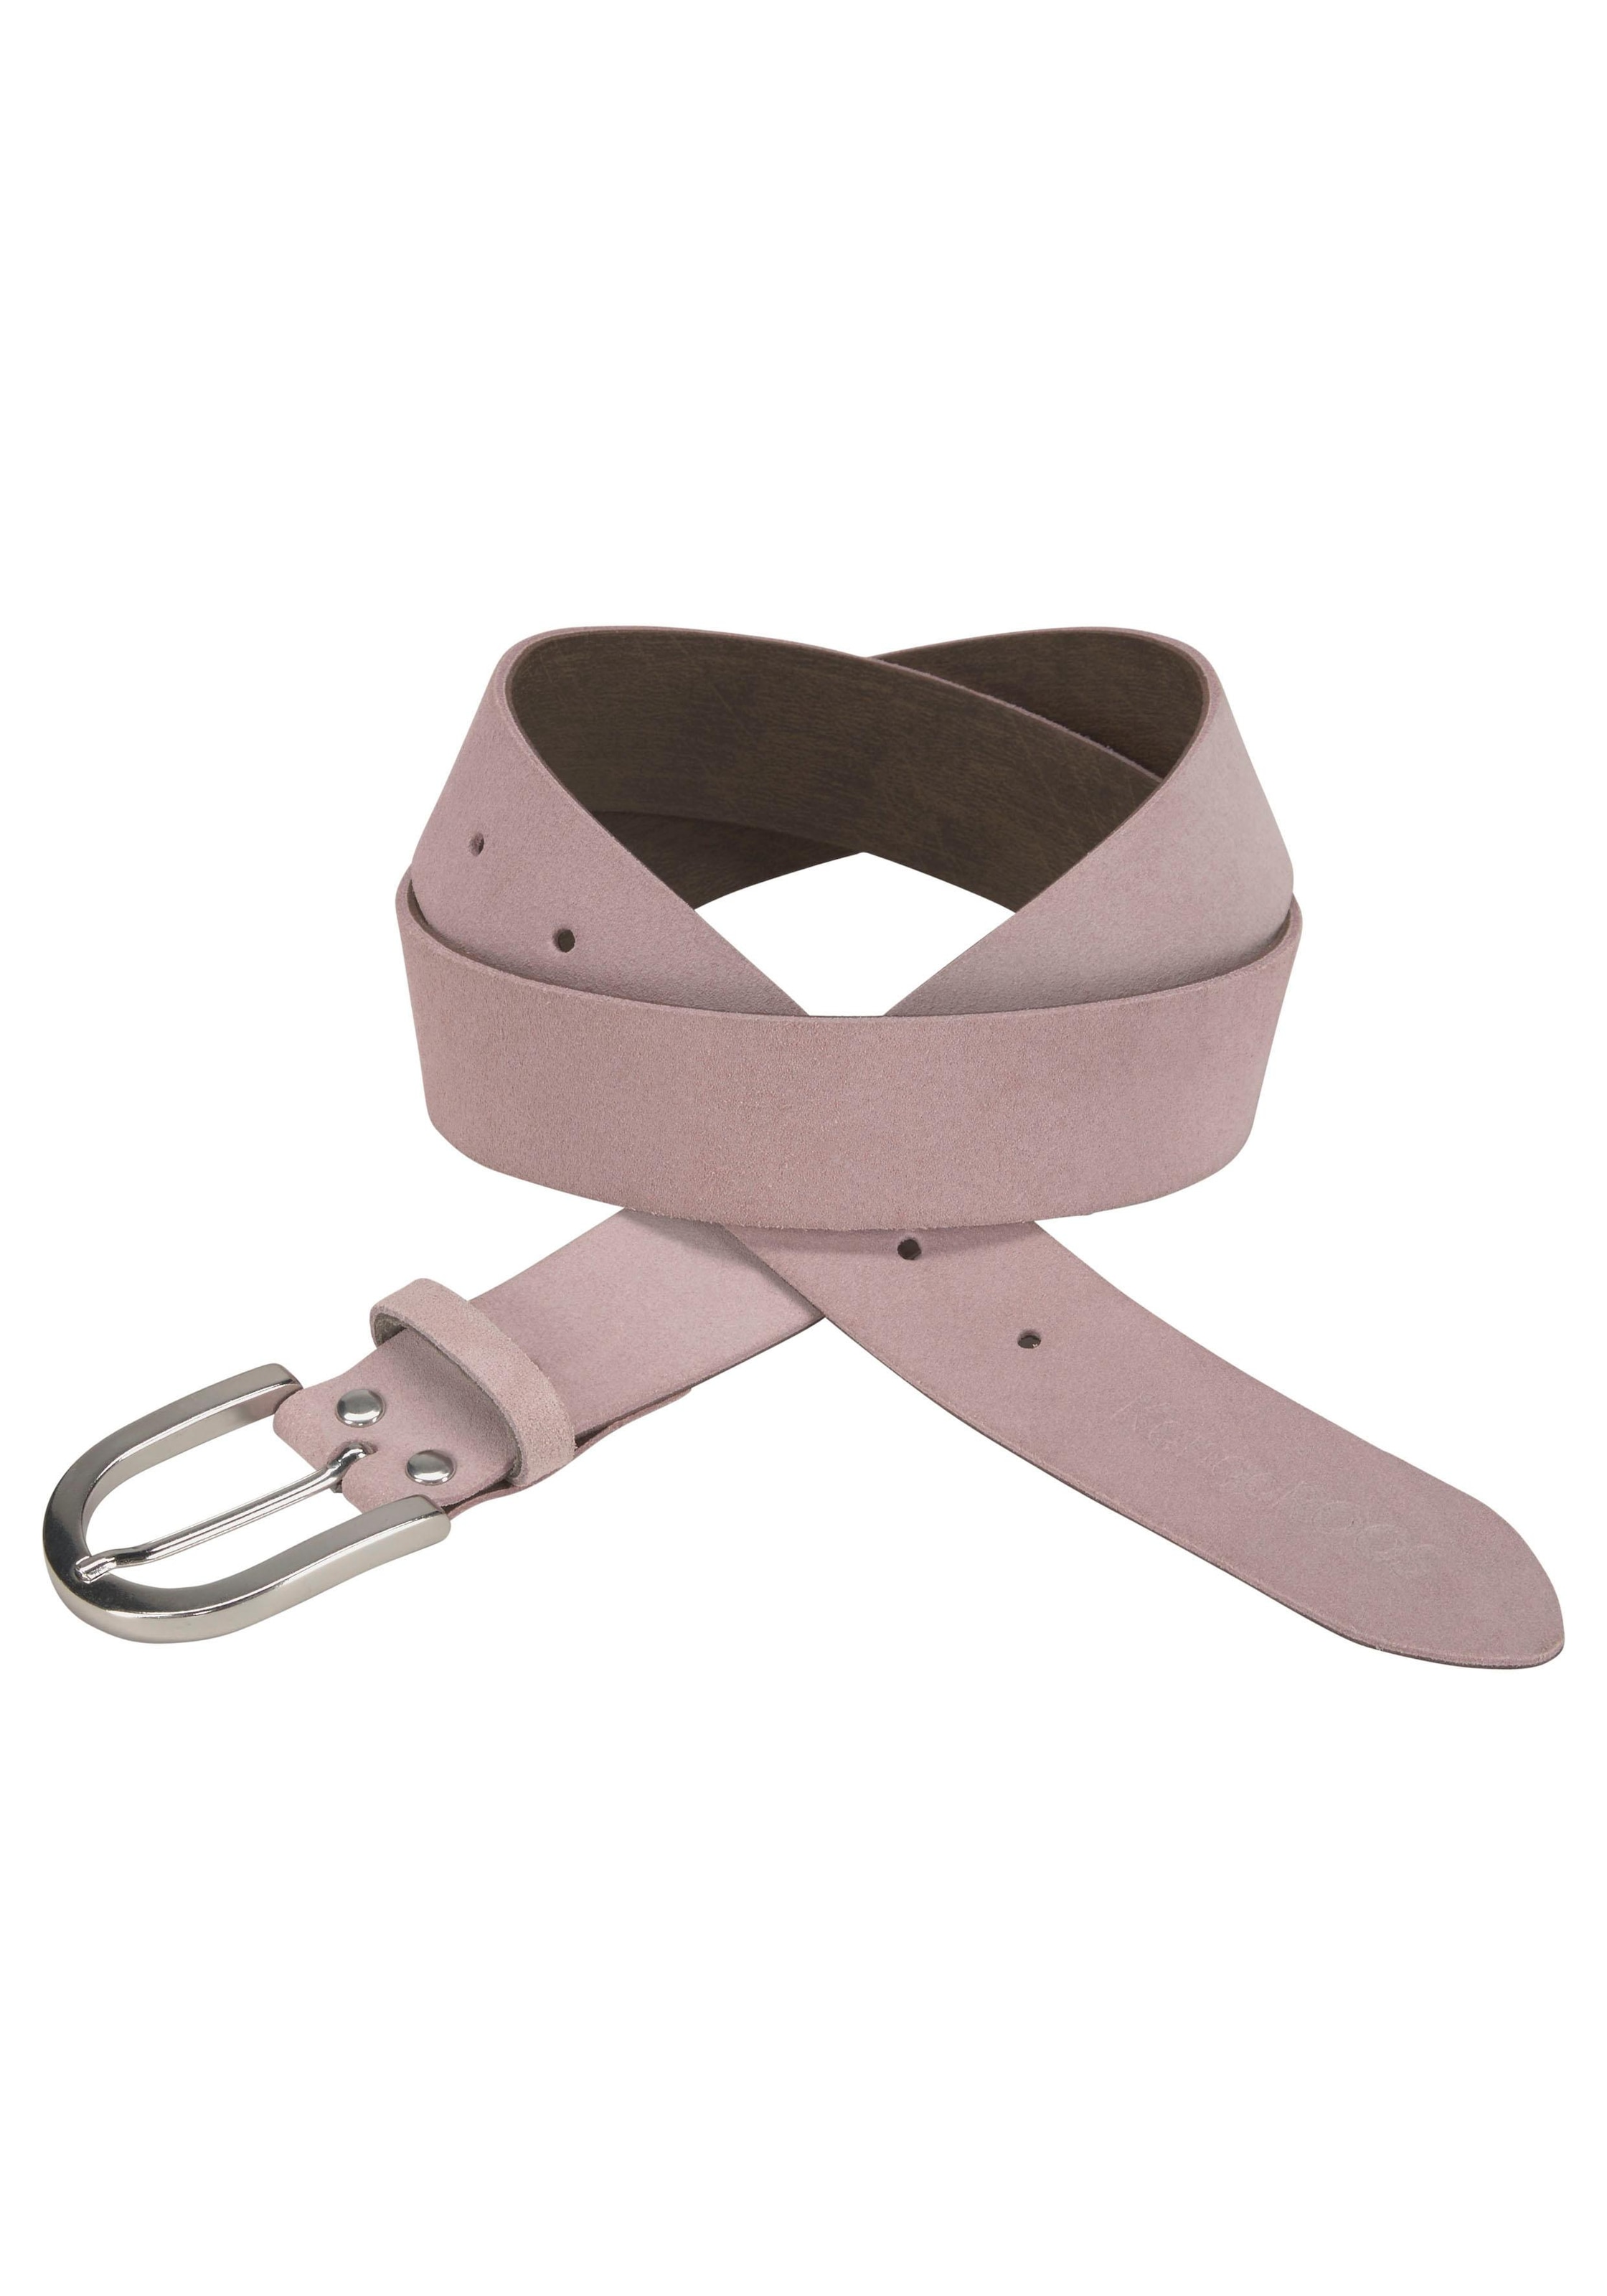 Imitation With »Accessories Key kaufen Belt Leather | CLASSICS Chain« I\'m URBAN Hüftgürtel walking